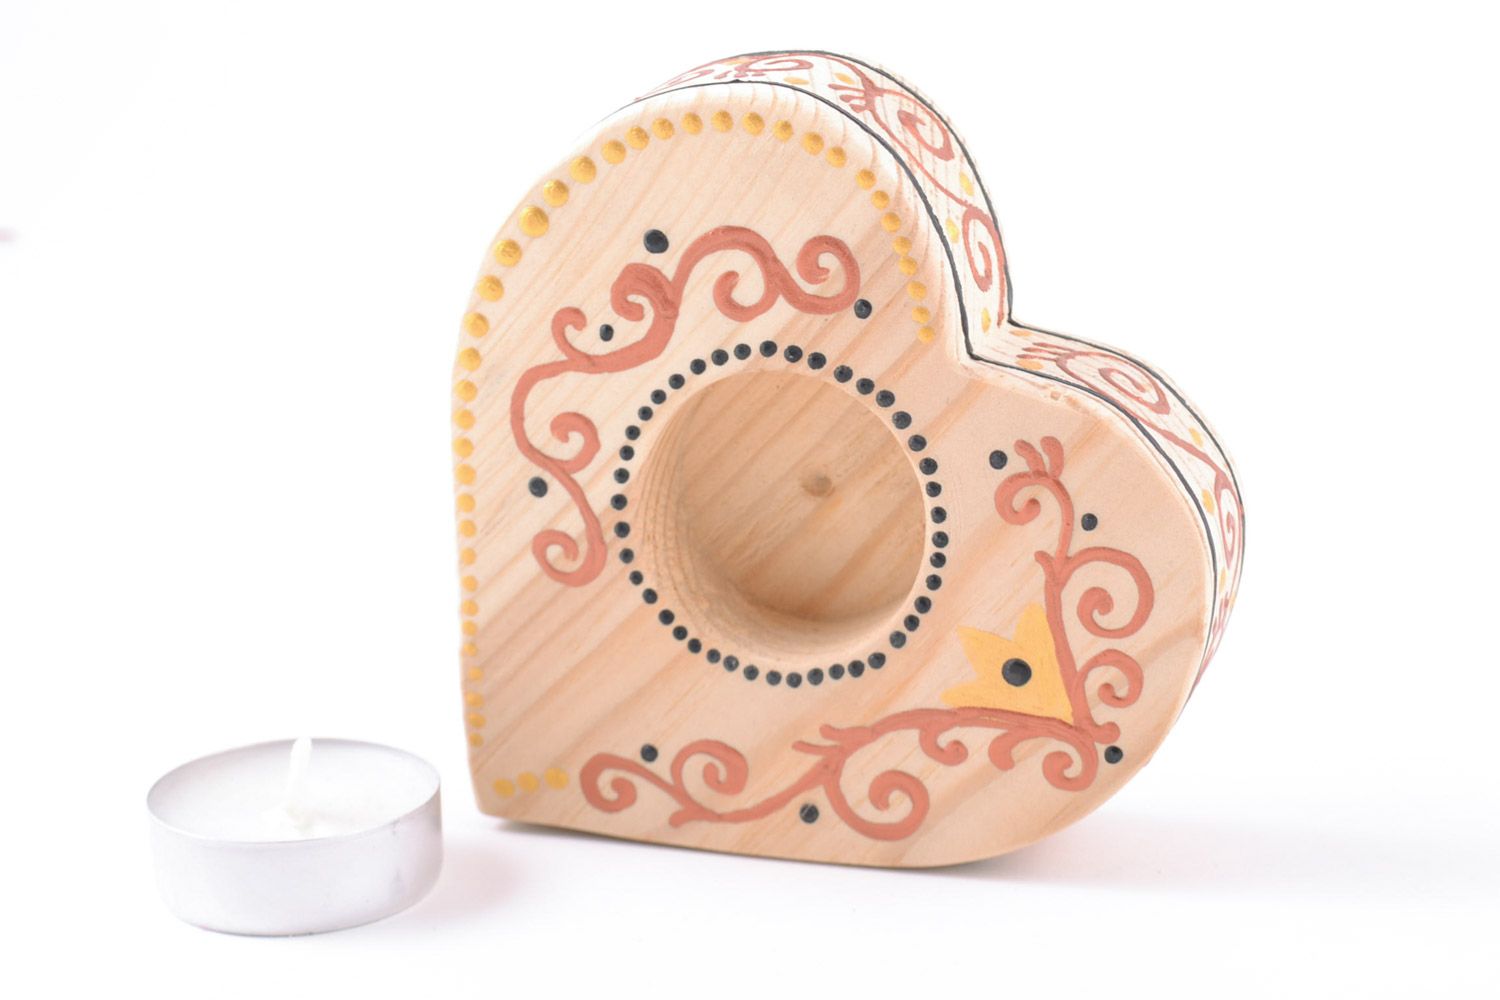 Candelero de madera hecho a mano con forma de corazón pintado con tintes foto 4